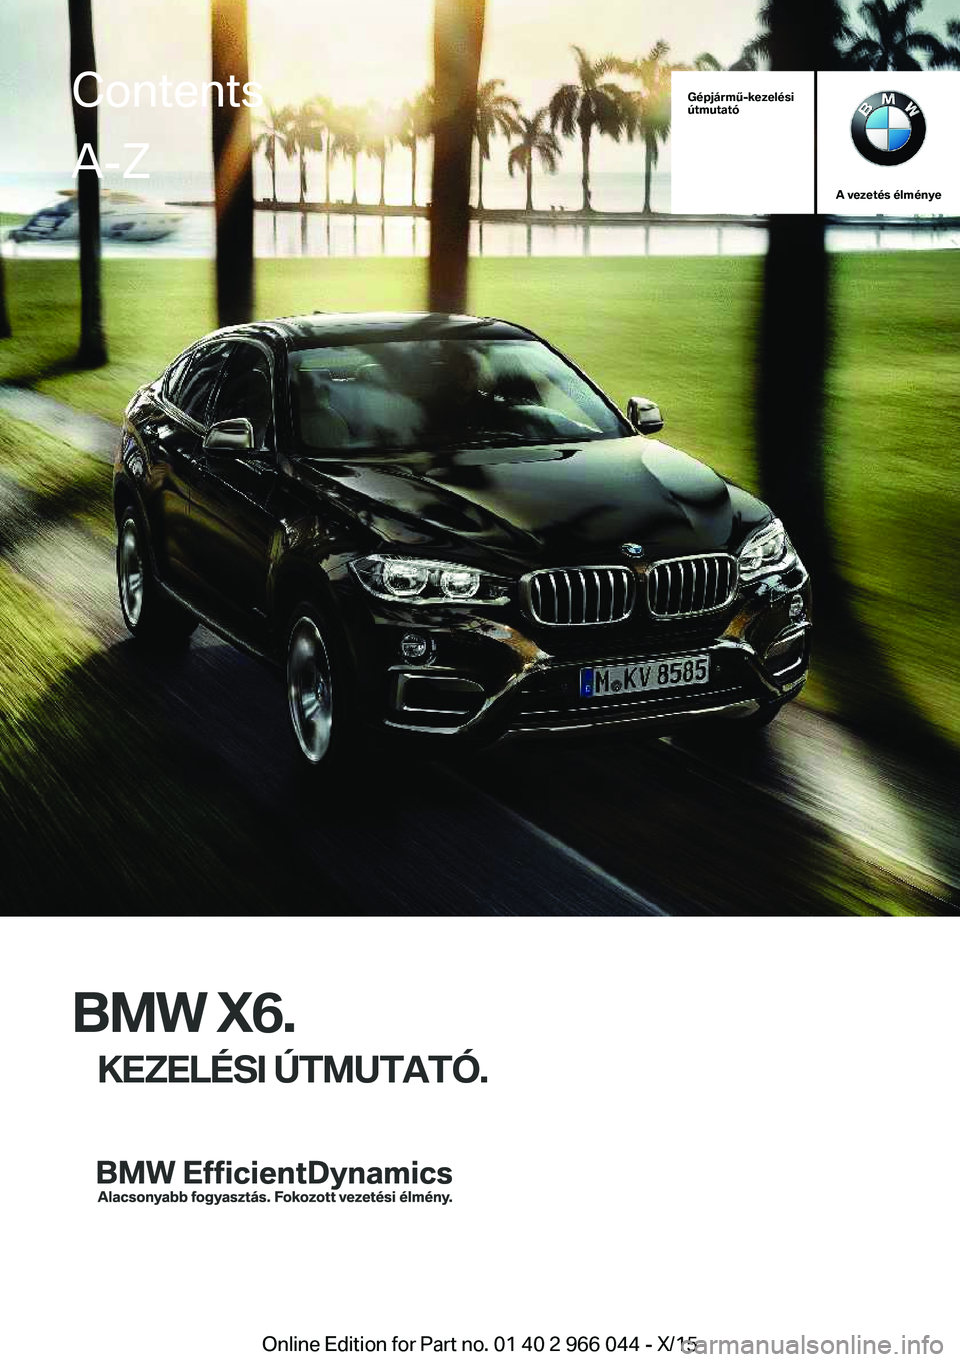 BMW X6 2016  Kezelési útmutató (in Hungarian) Gépjármű-kezelési
útmutató
A vezetés élménye
BMW X6.
KEZELÉSI ÚTMUTATÓ.
ContentsA-Z
Online Edition for Part no. 01 40 2 966 044 - X/15   